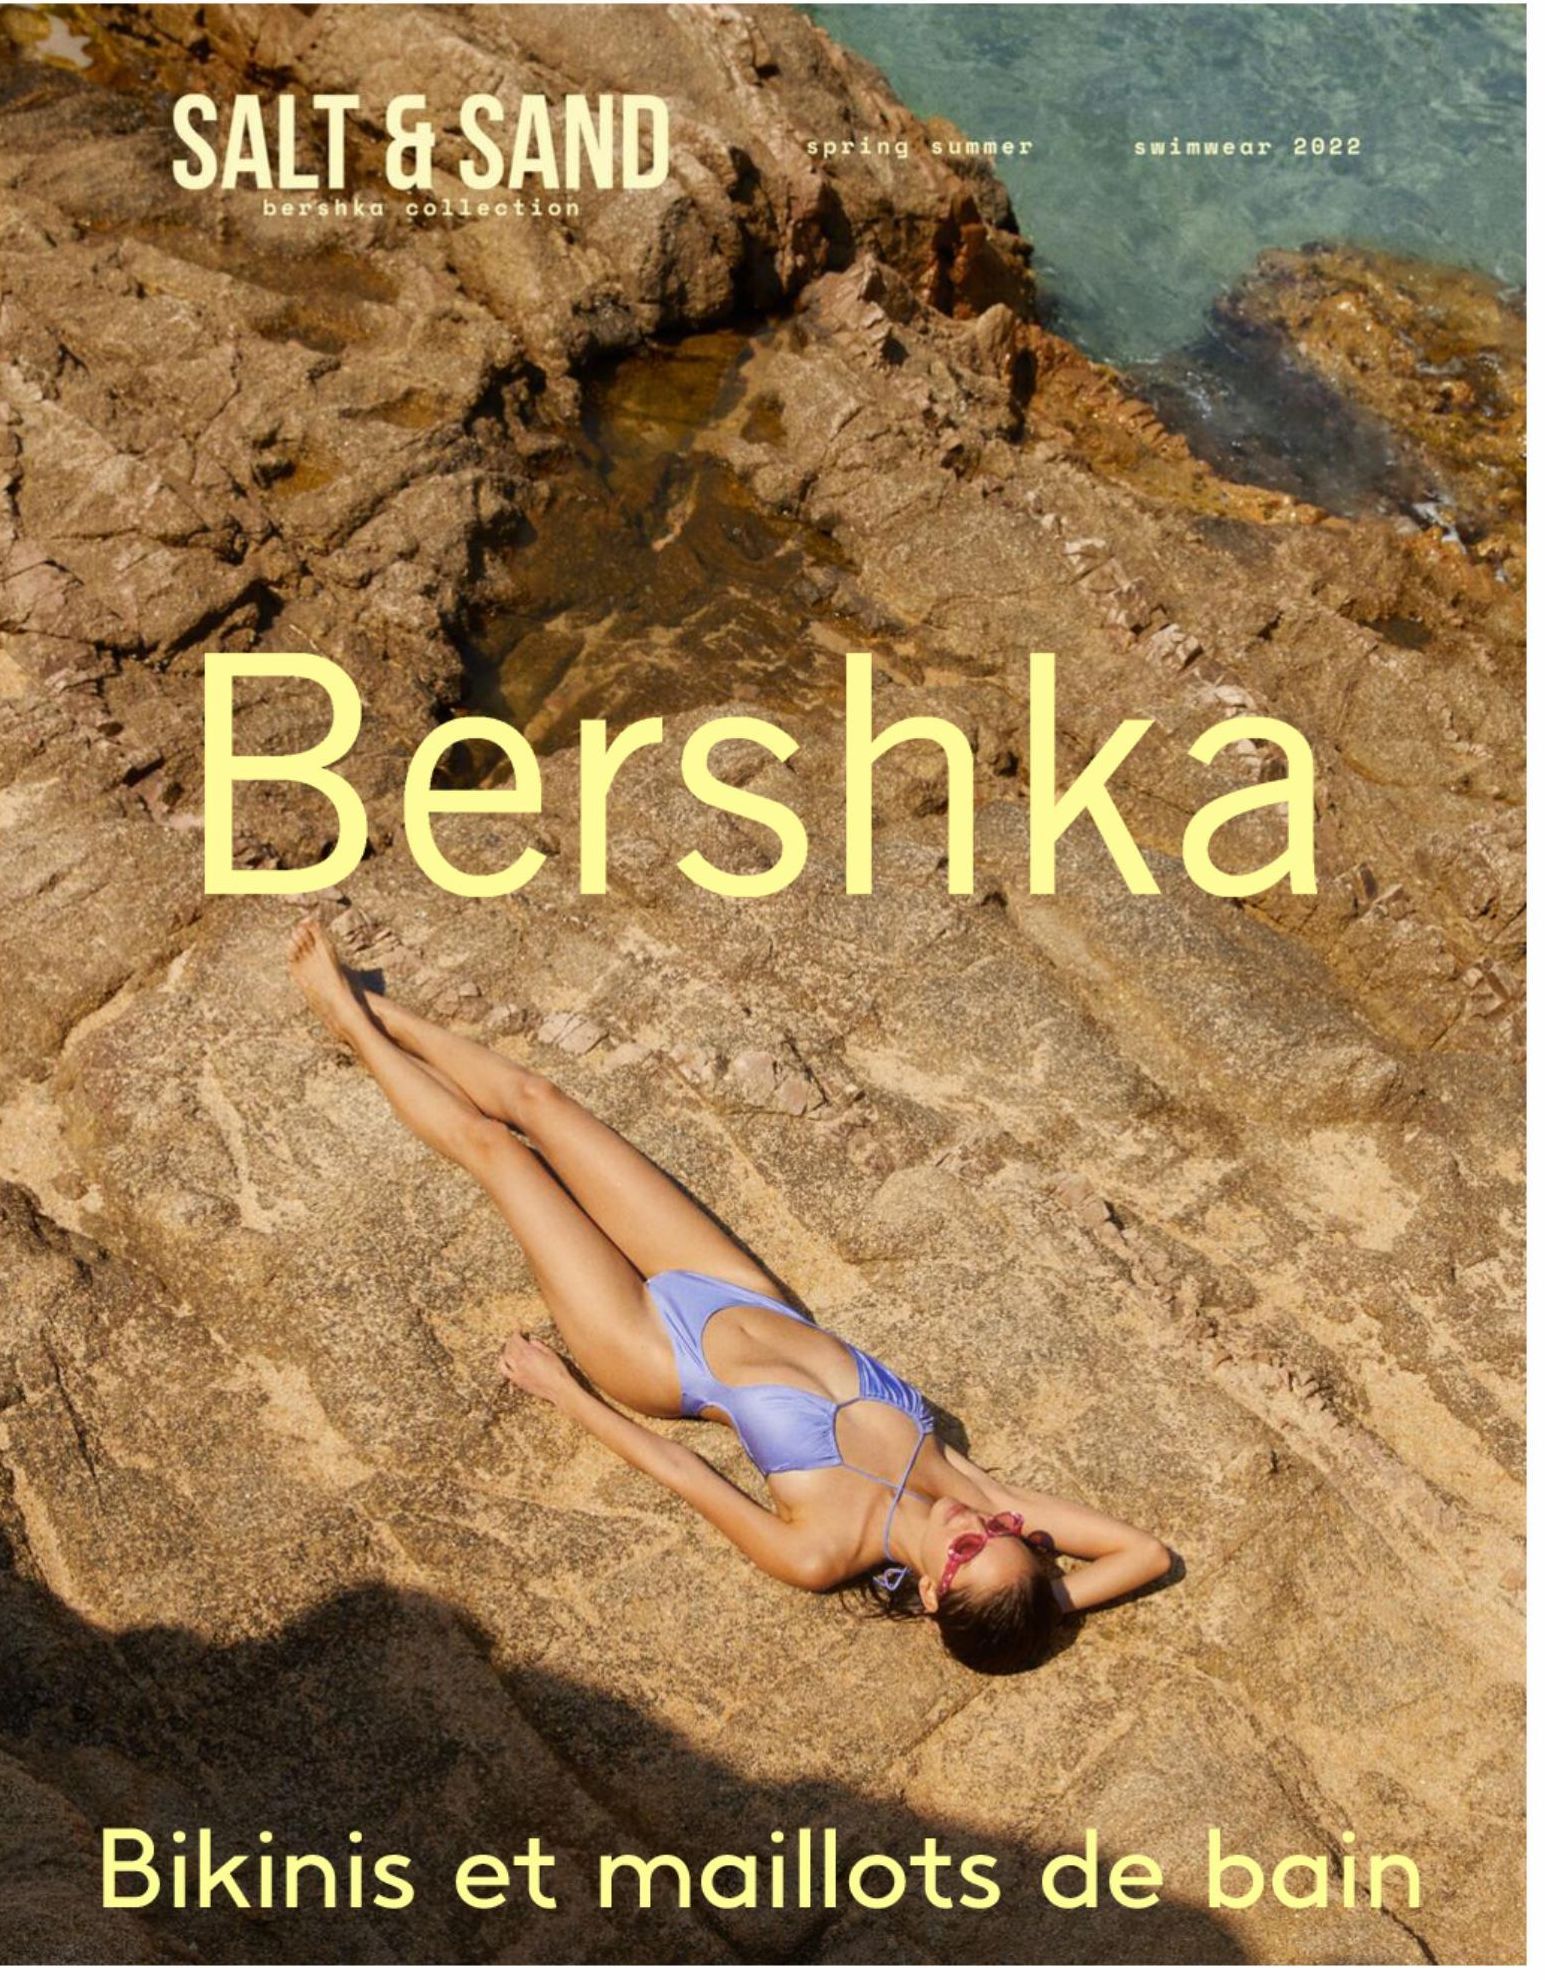 Saison offre sur Bershka